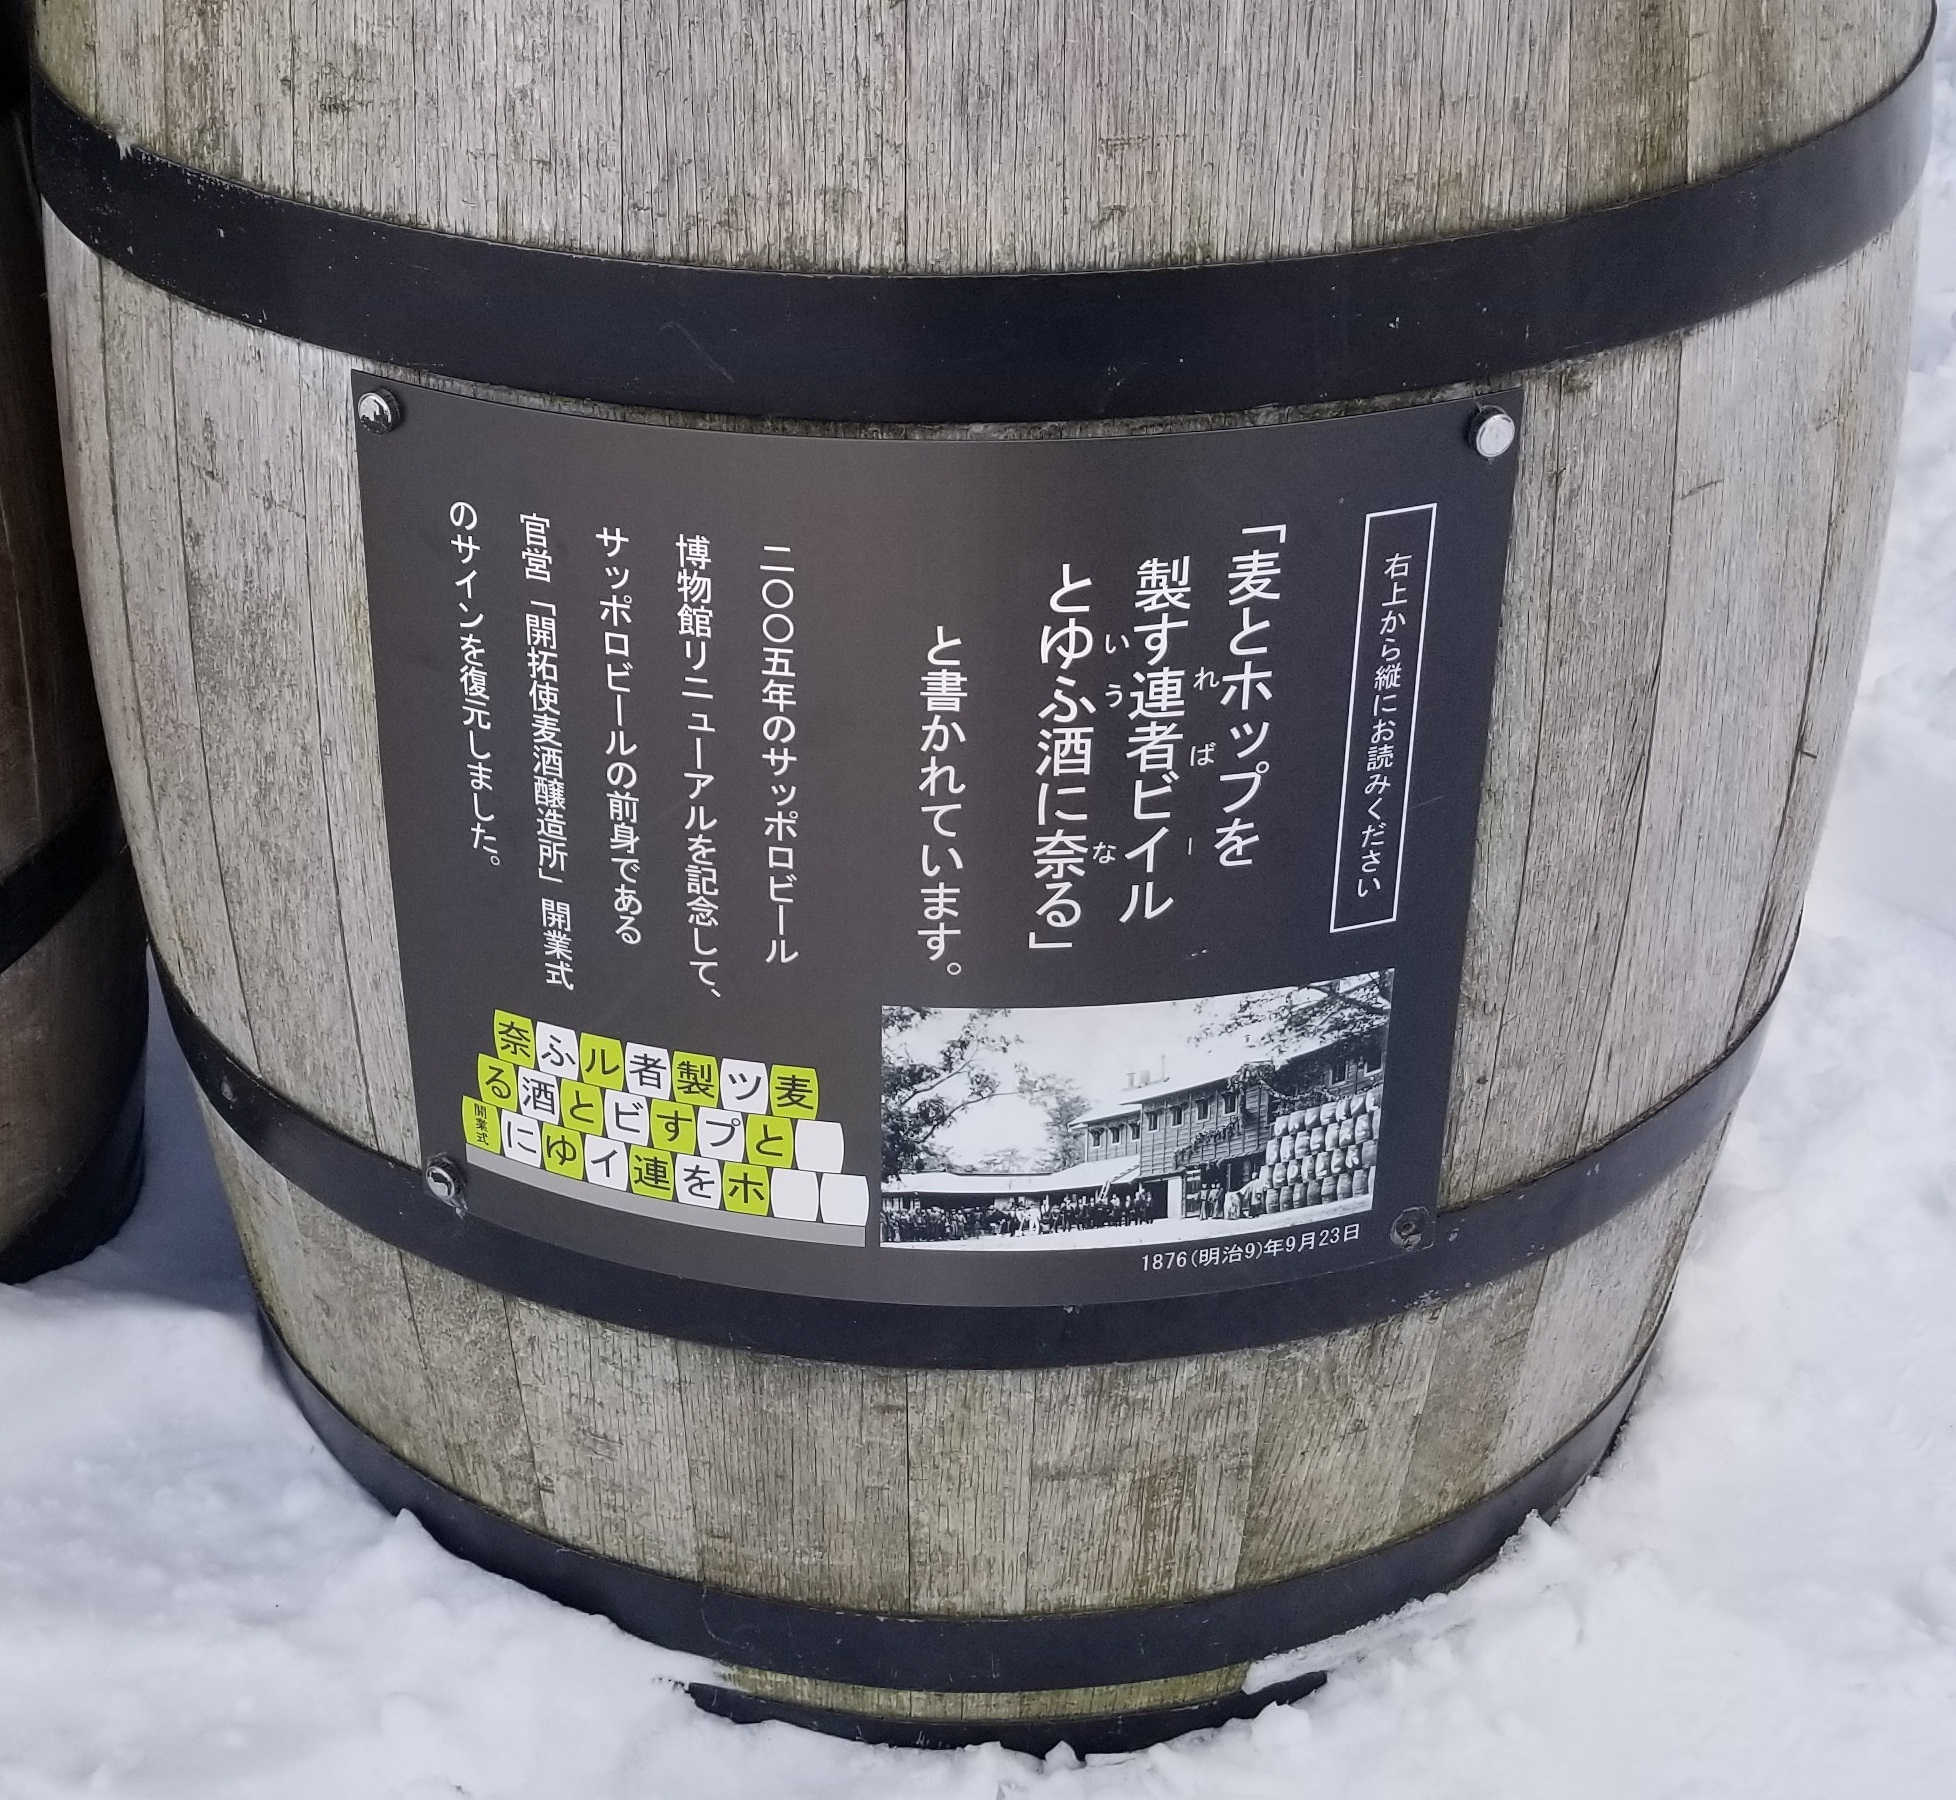 barrels translation